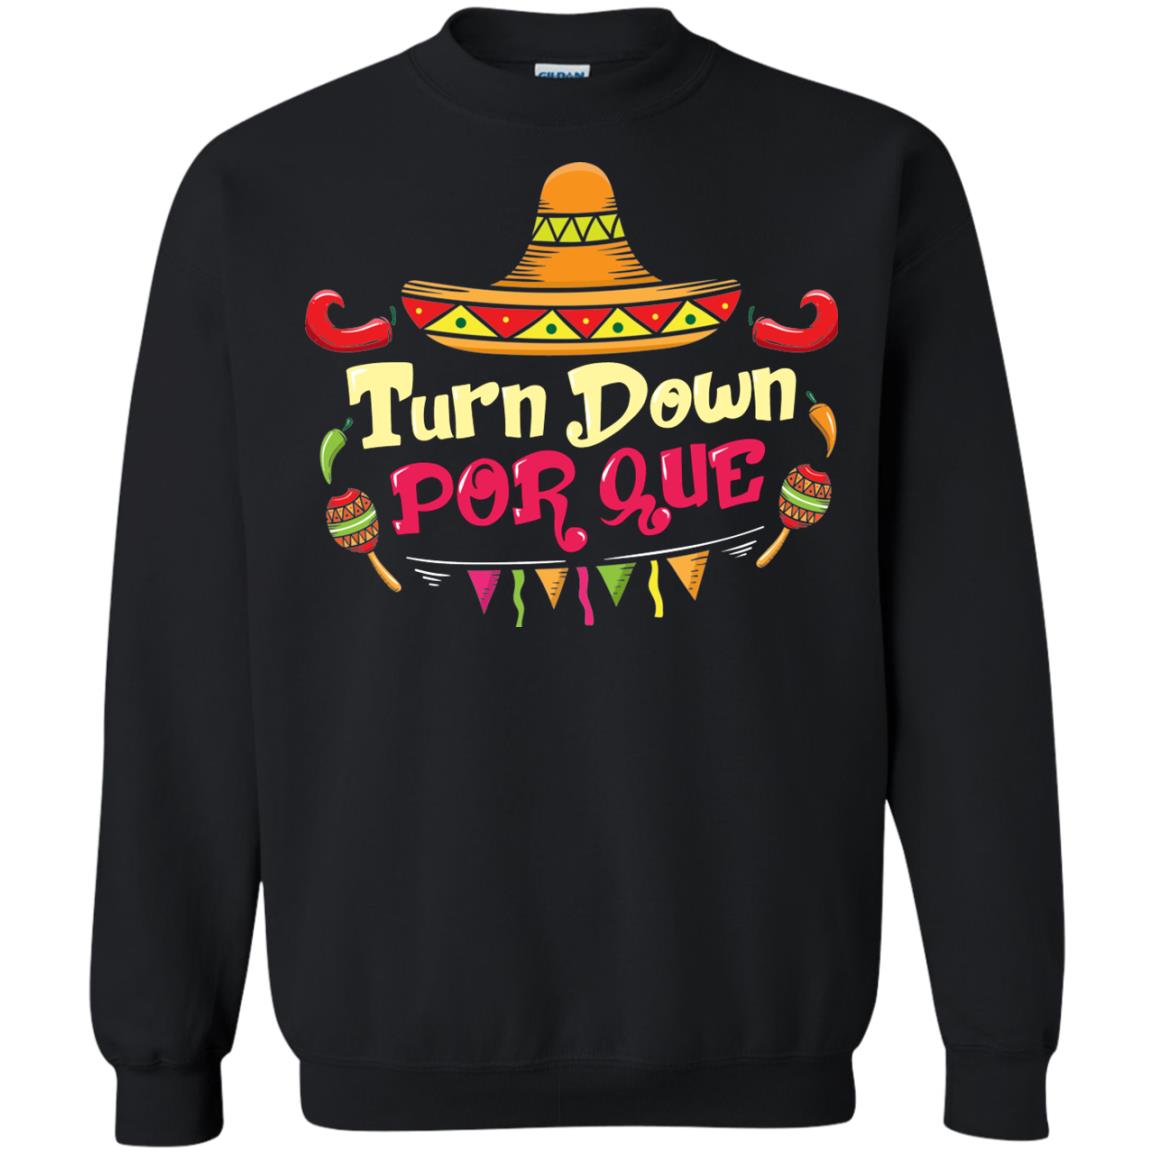 Turn Down Por Que 5th Of May Shirt